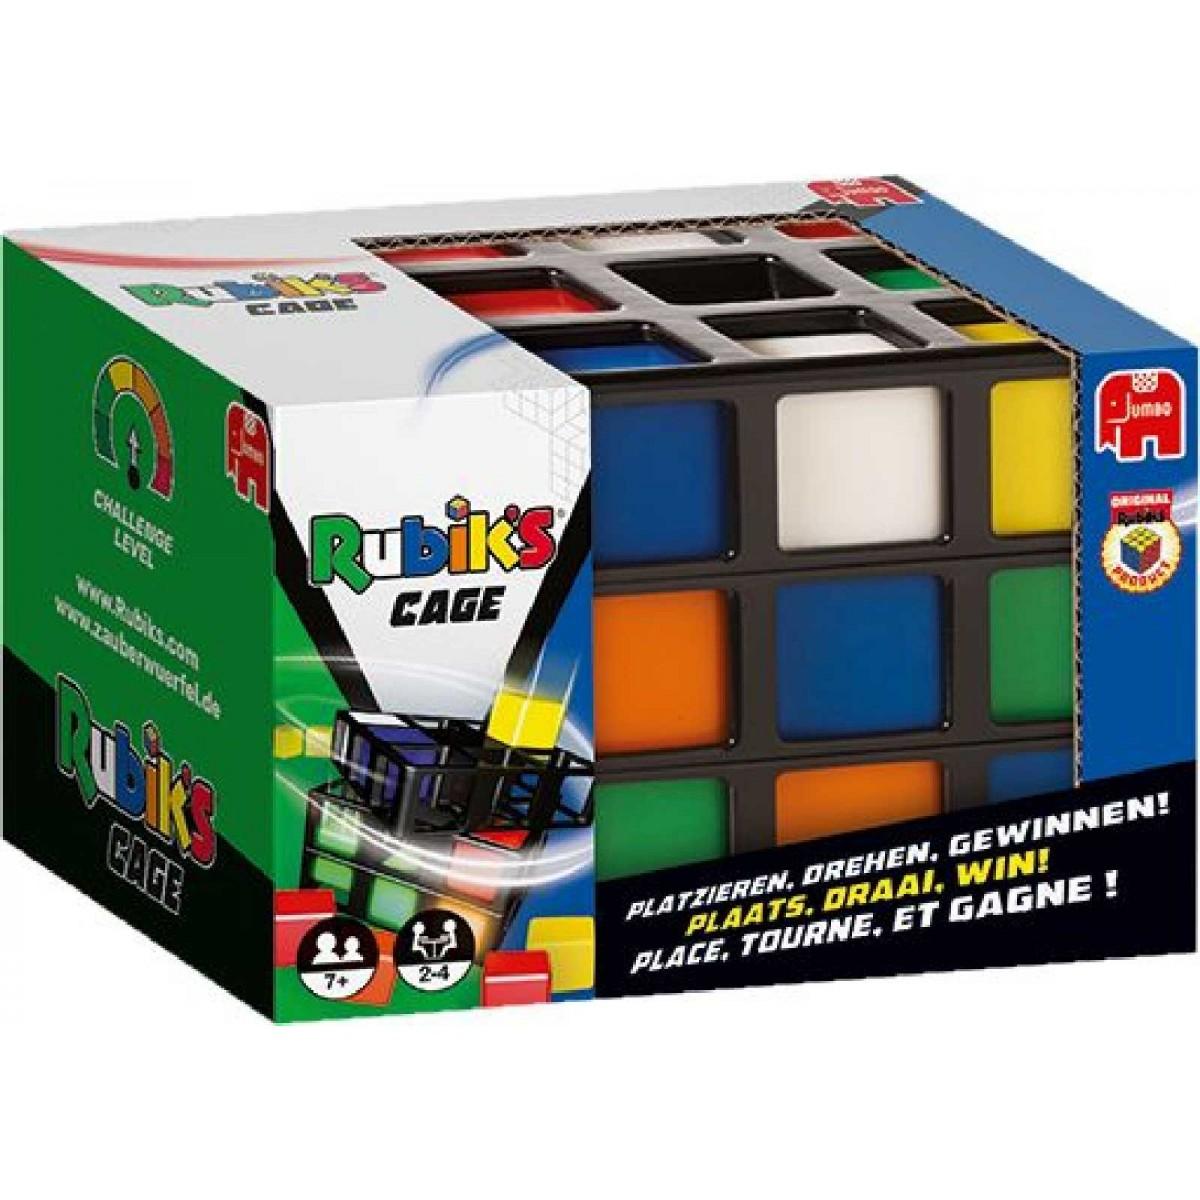 Rubik's Cage 3x3x3